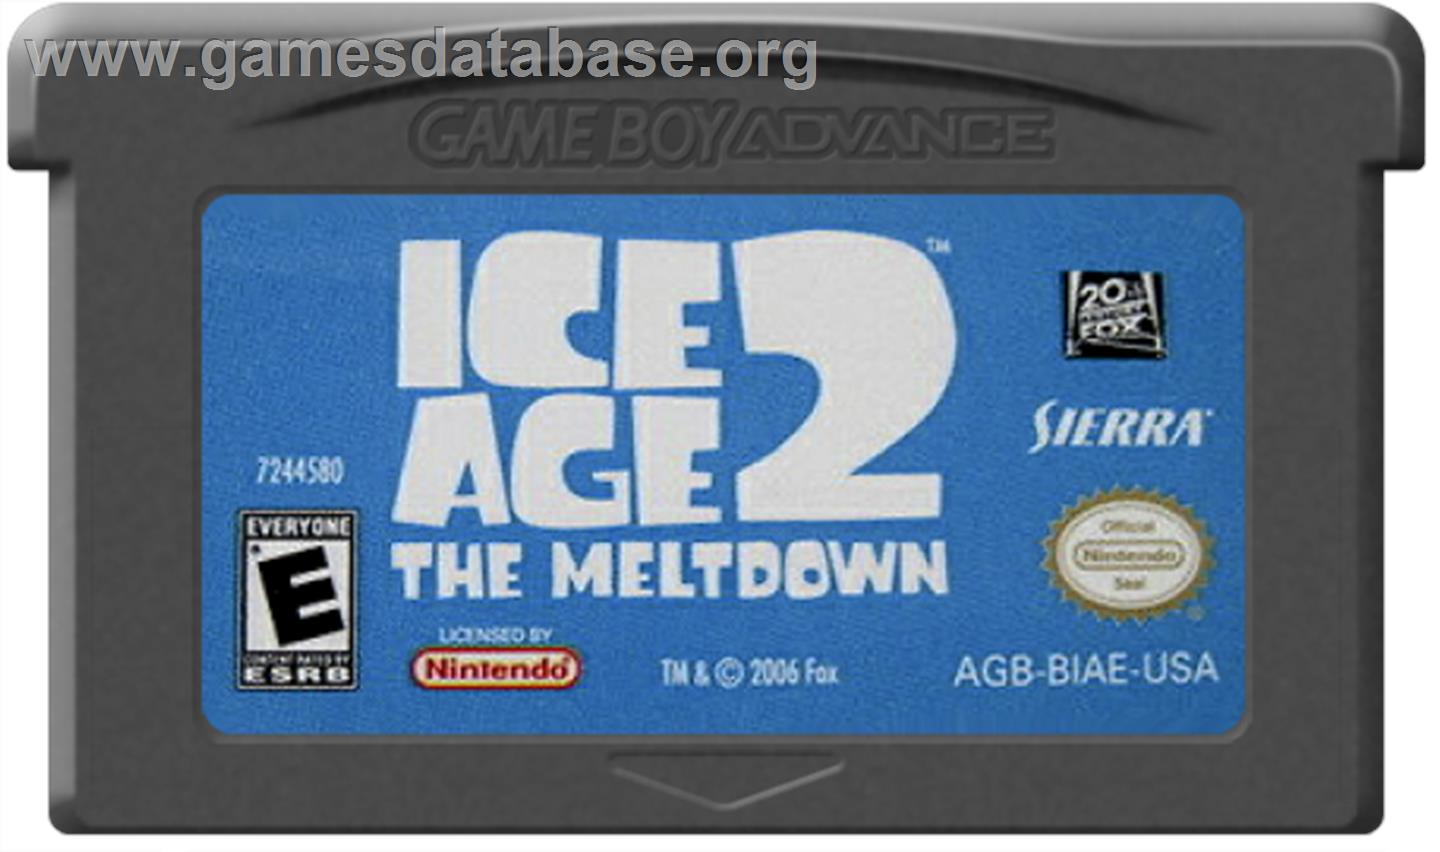 Ice Age 2: The Meltdown - Nintendo Game Boy Advance - Artwork - Cartridge